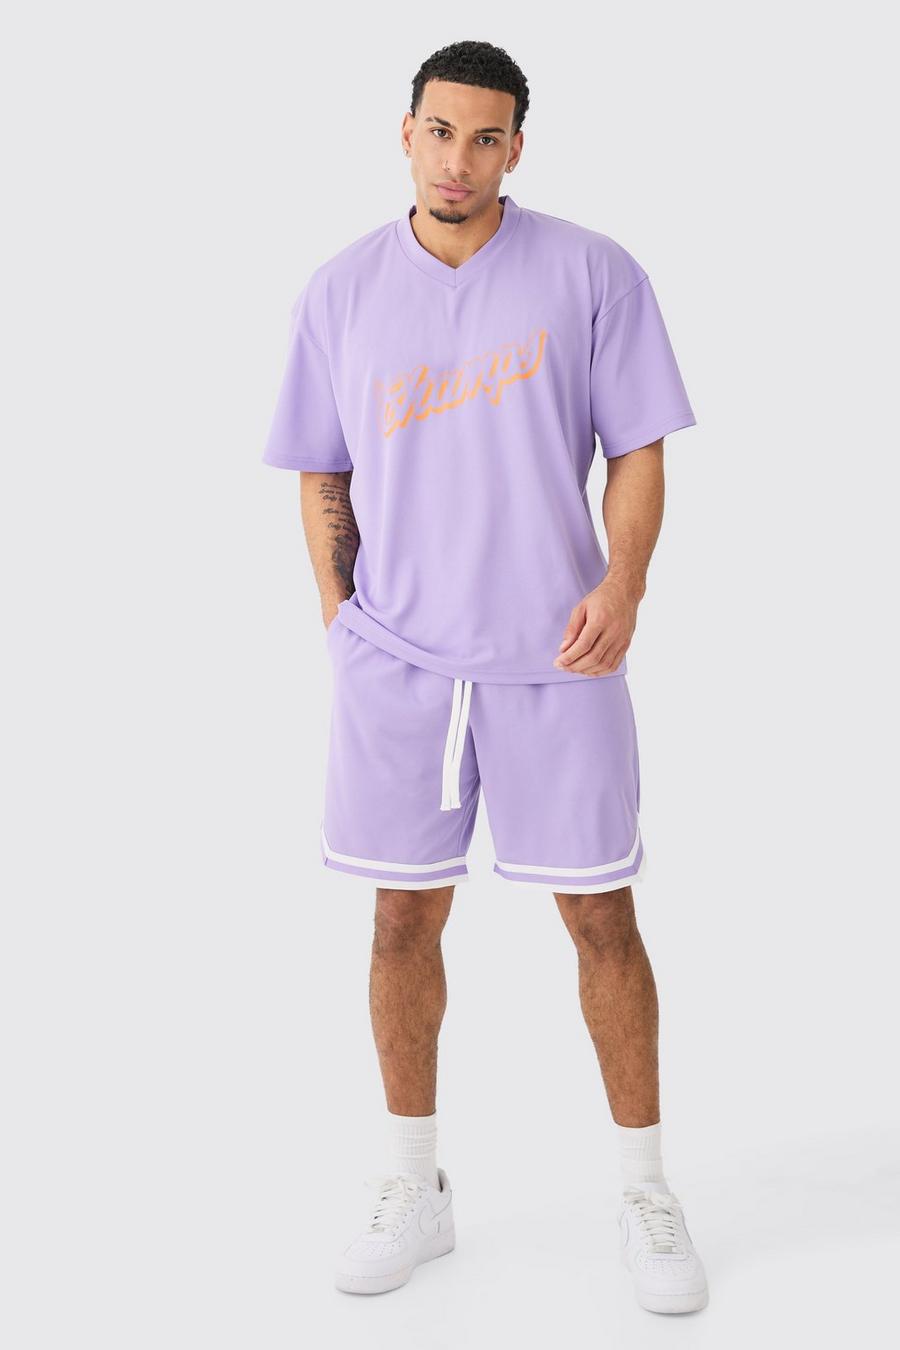 Purple Oversized Mesh Varsity Top And Basketball Shorts Set